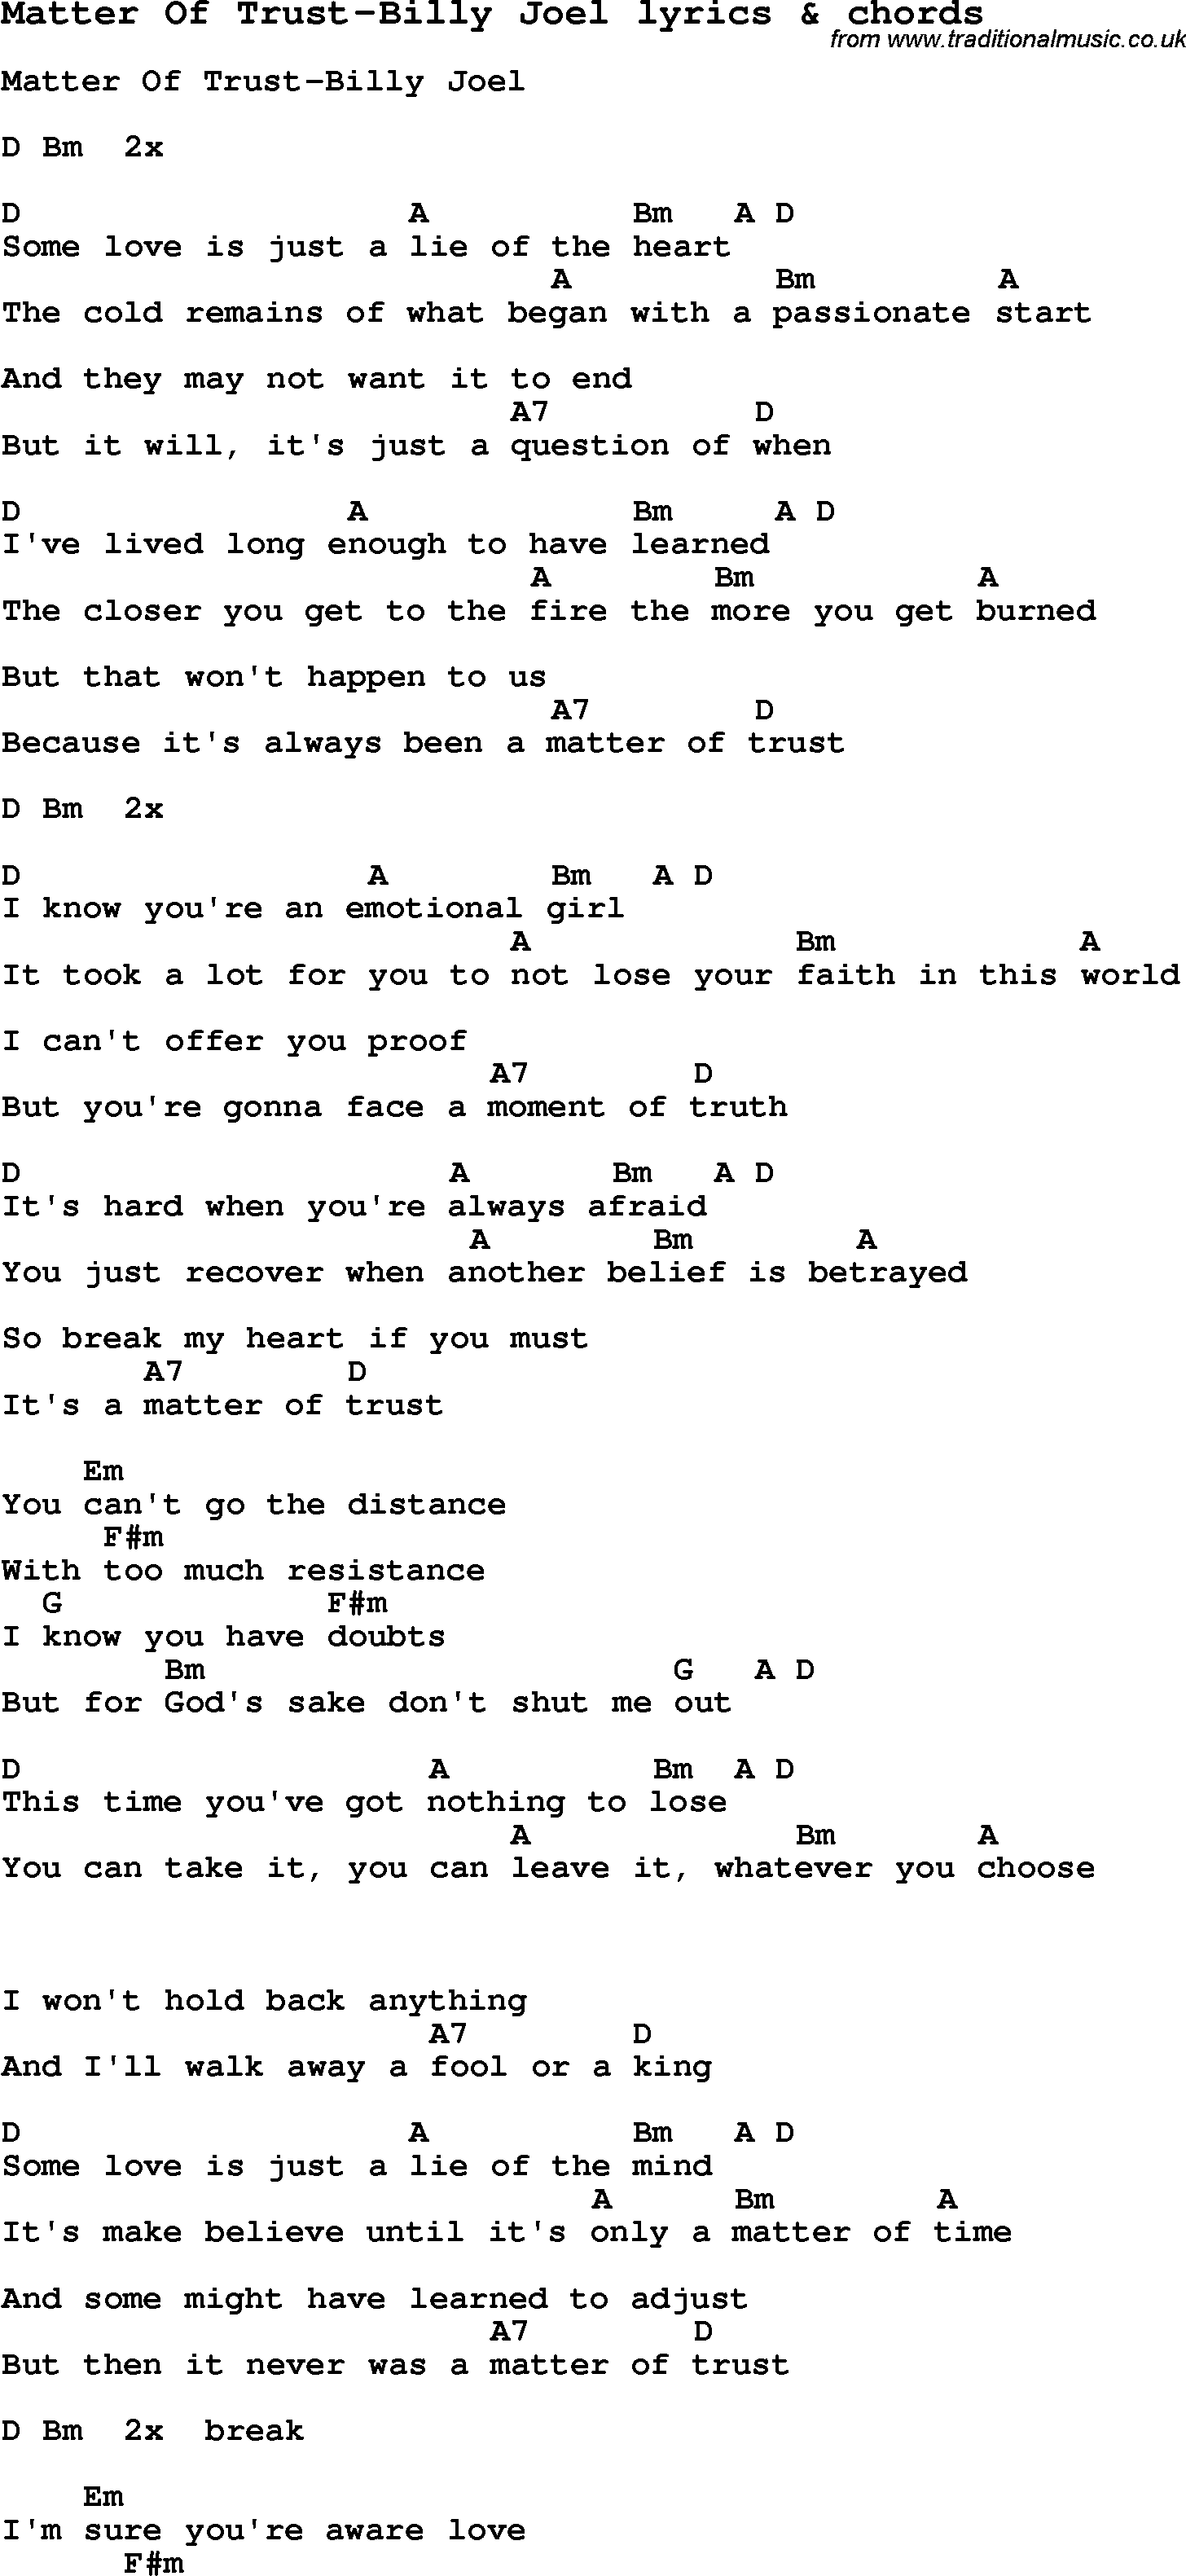 Love Song Lyrics for: Matter Of Trust-Billy Joel with chords for Ukulele, Guitar Banjo etc.